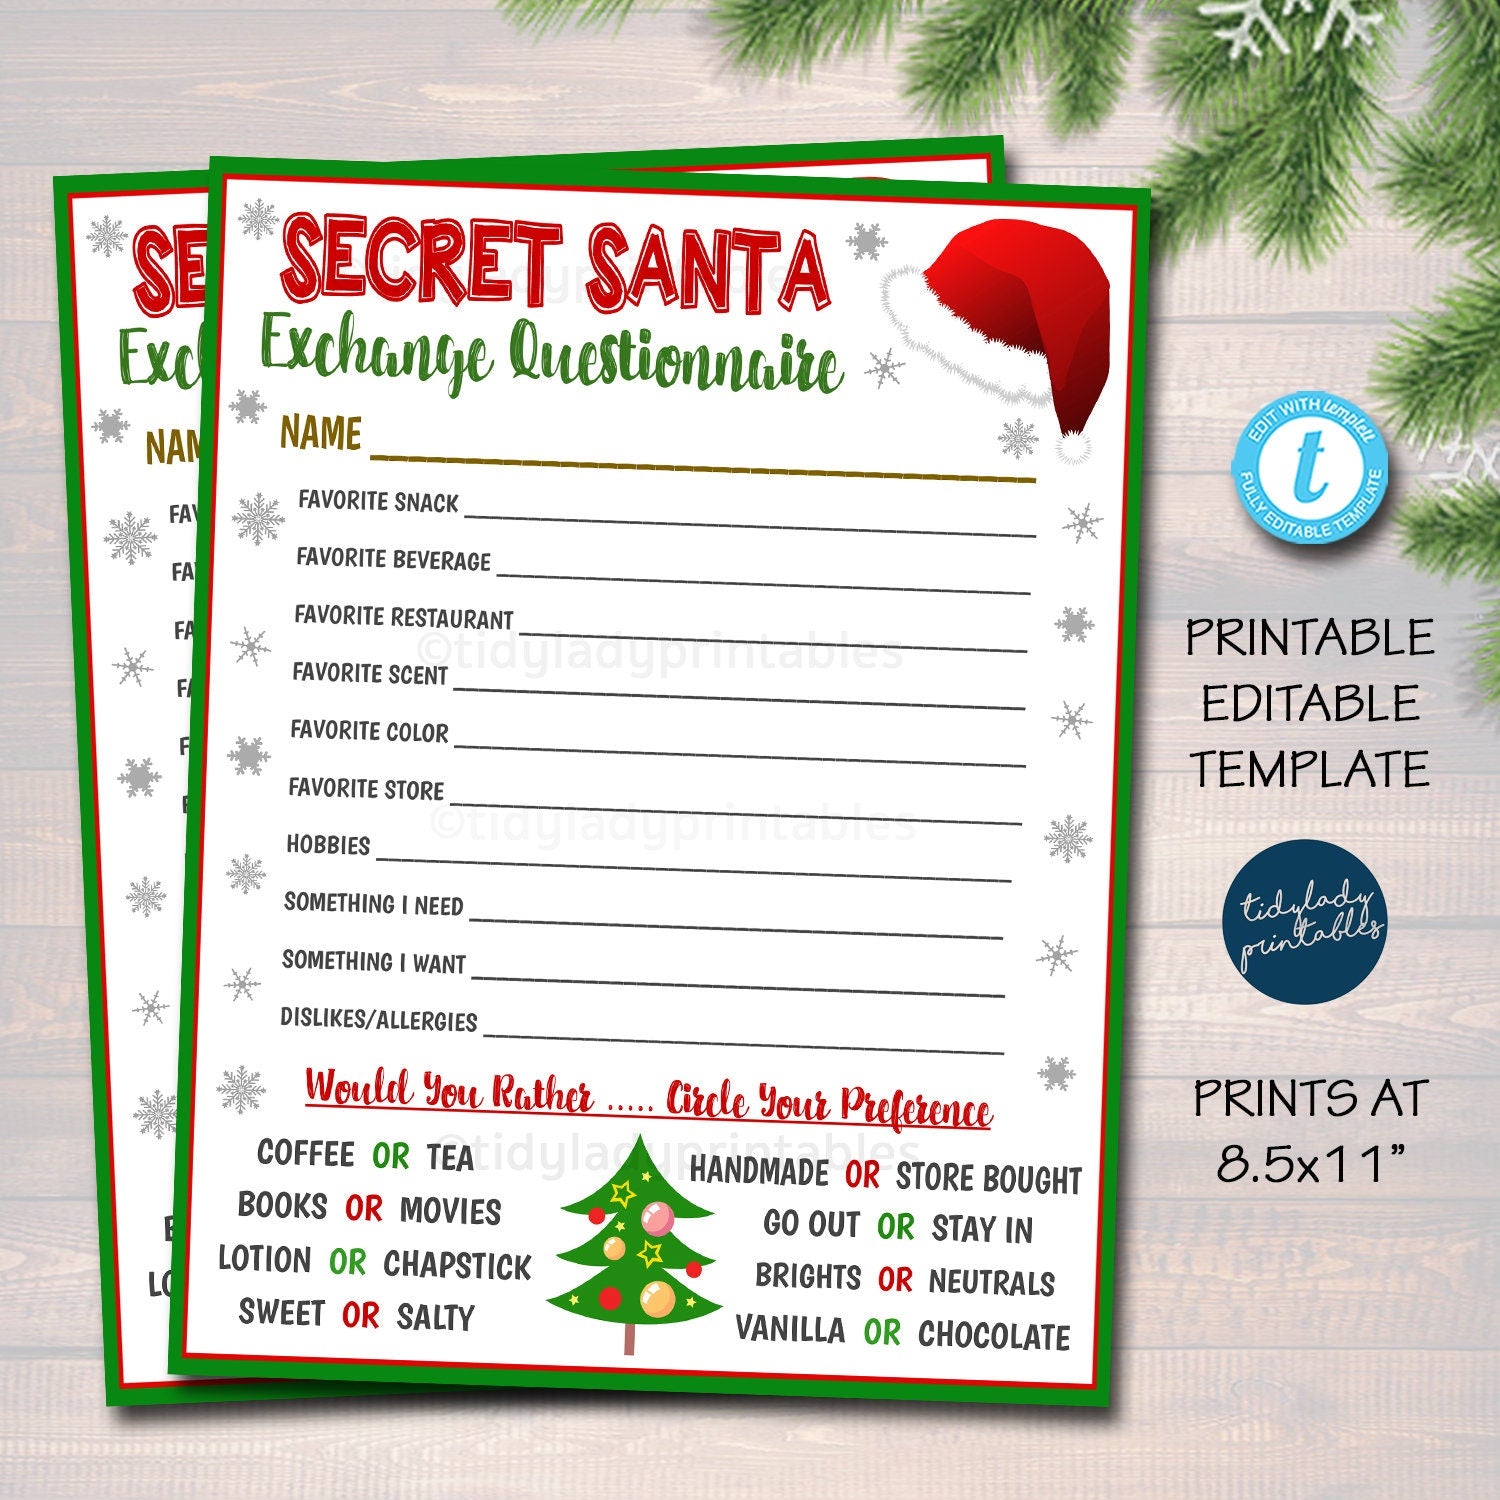 Secret Santa List Free Printable ubicaciondepersonas cdmx gob mx